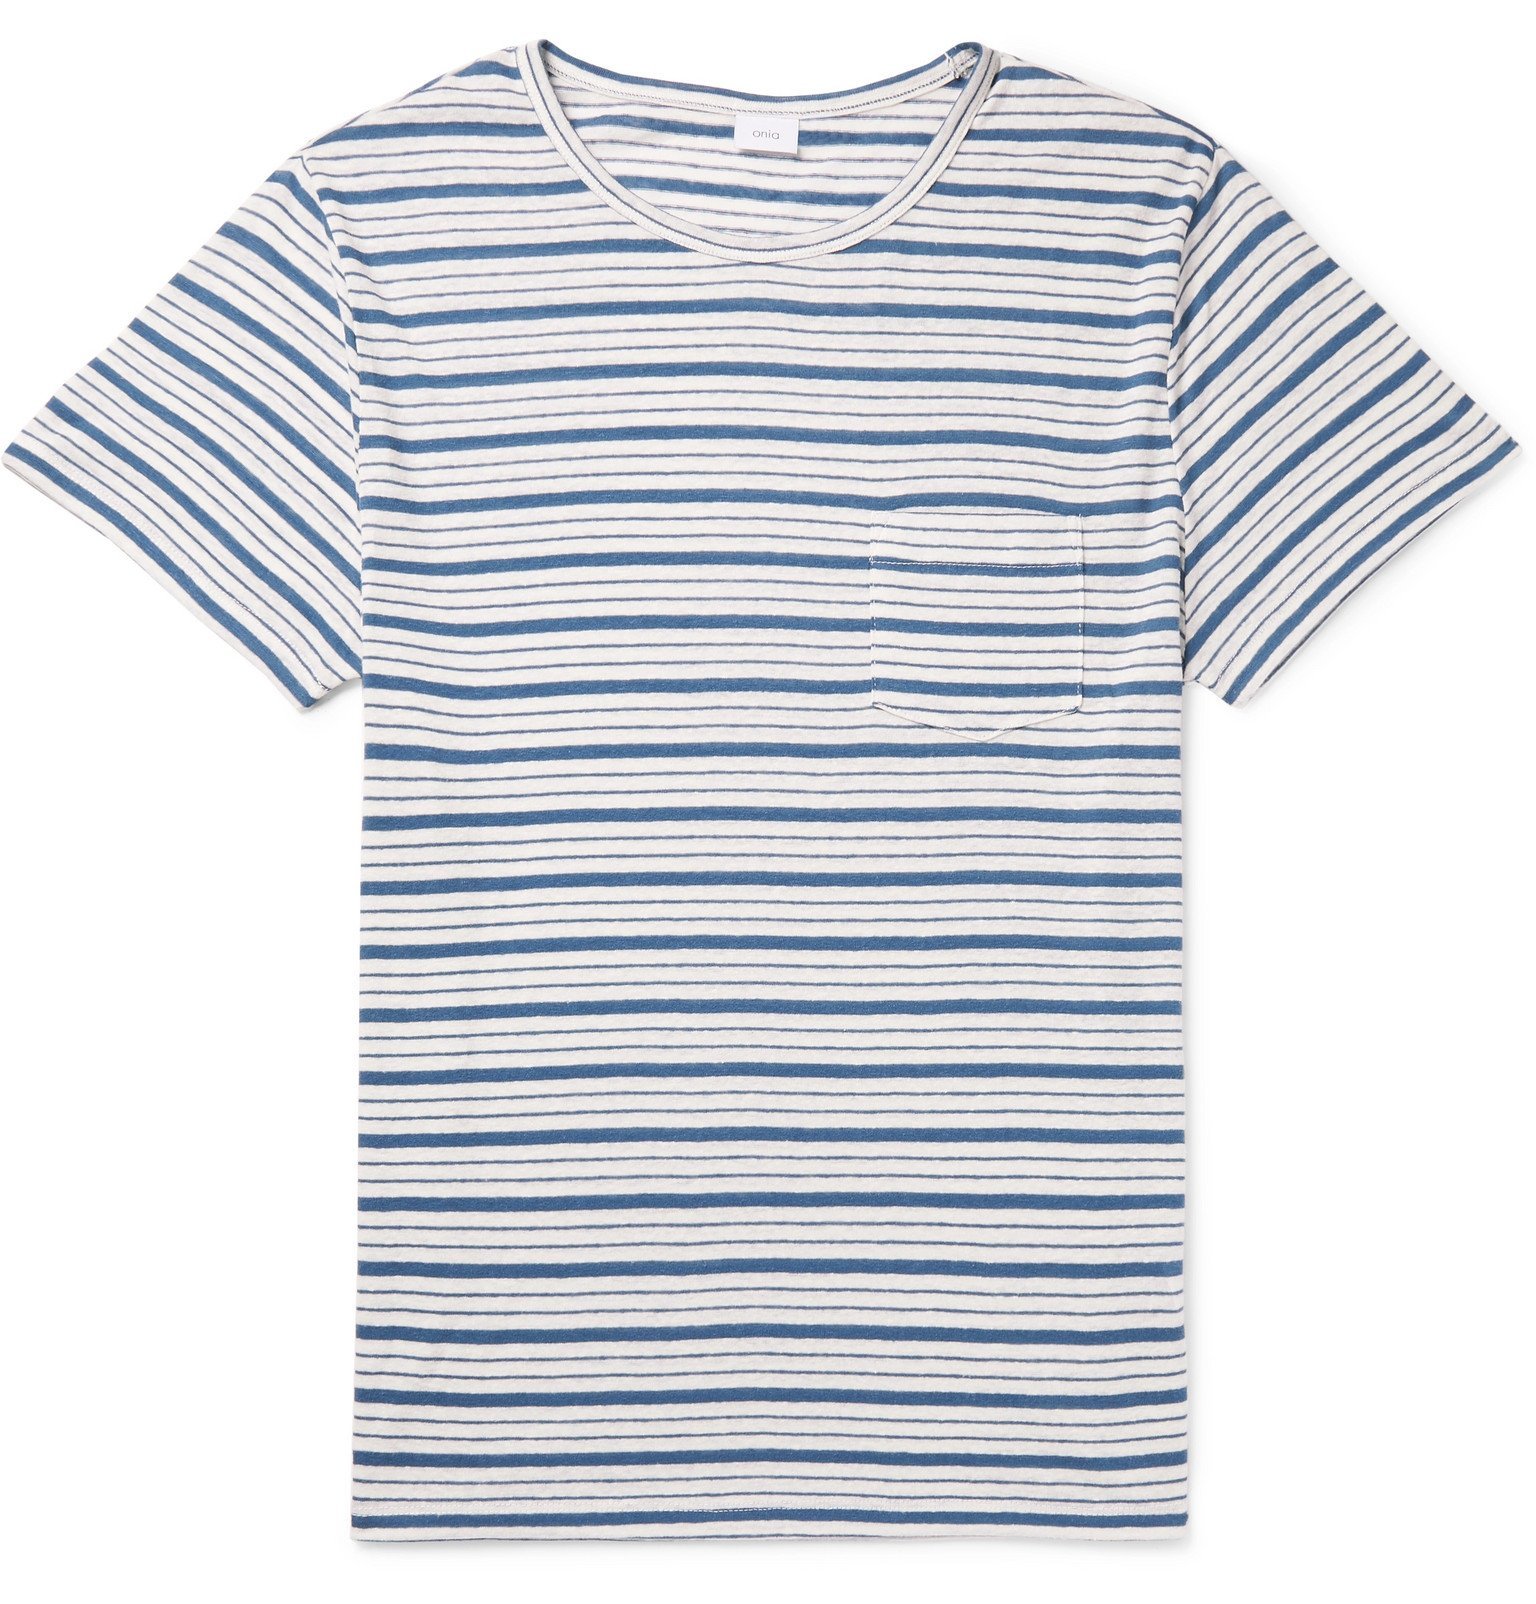 Onia - Chad Striped Linen-Blend T-Shirt - Blue Onia